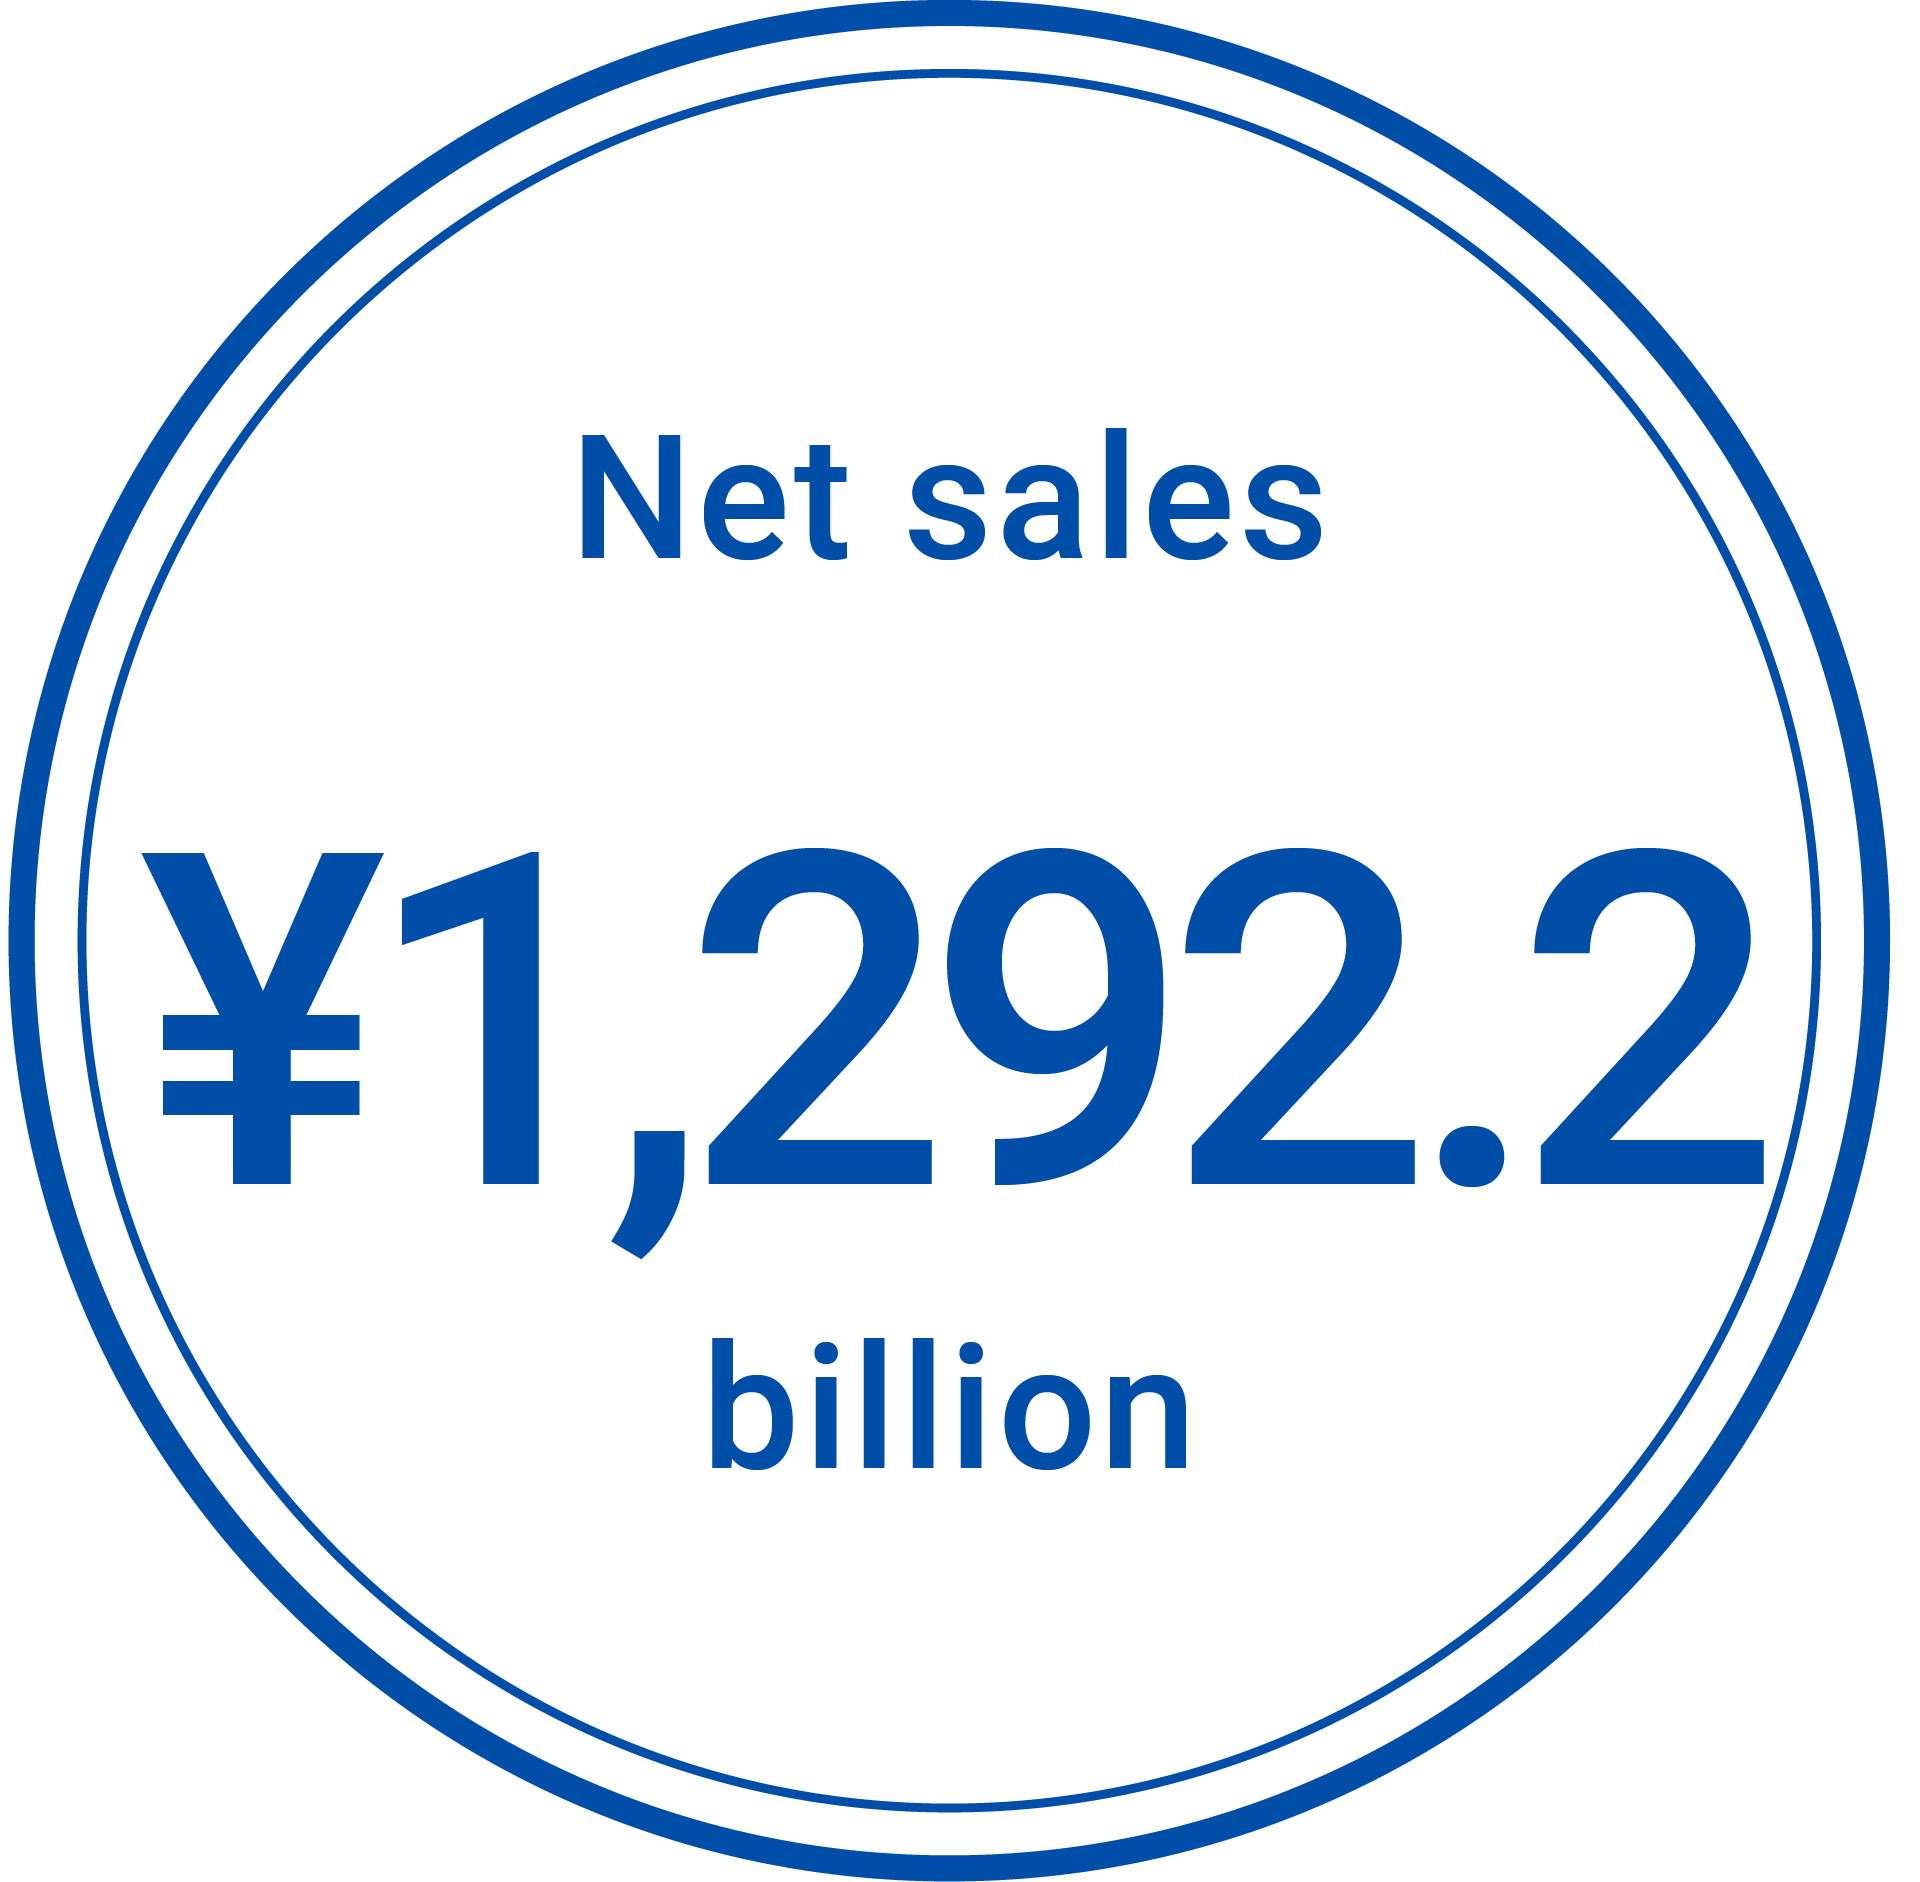 Net sales ¥1,292.2 billion